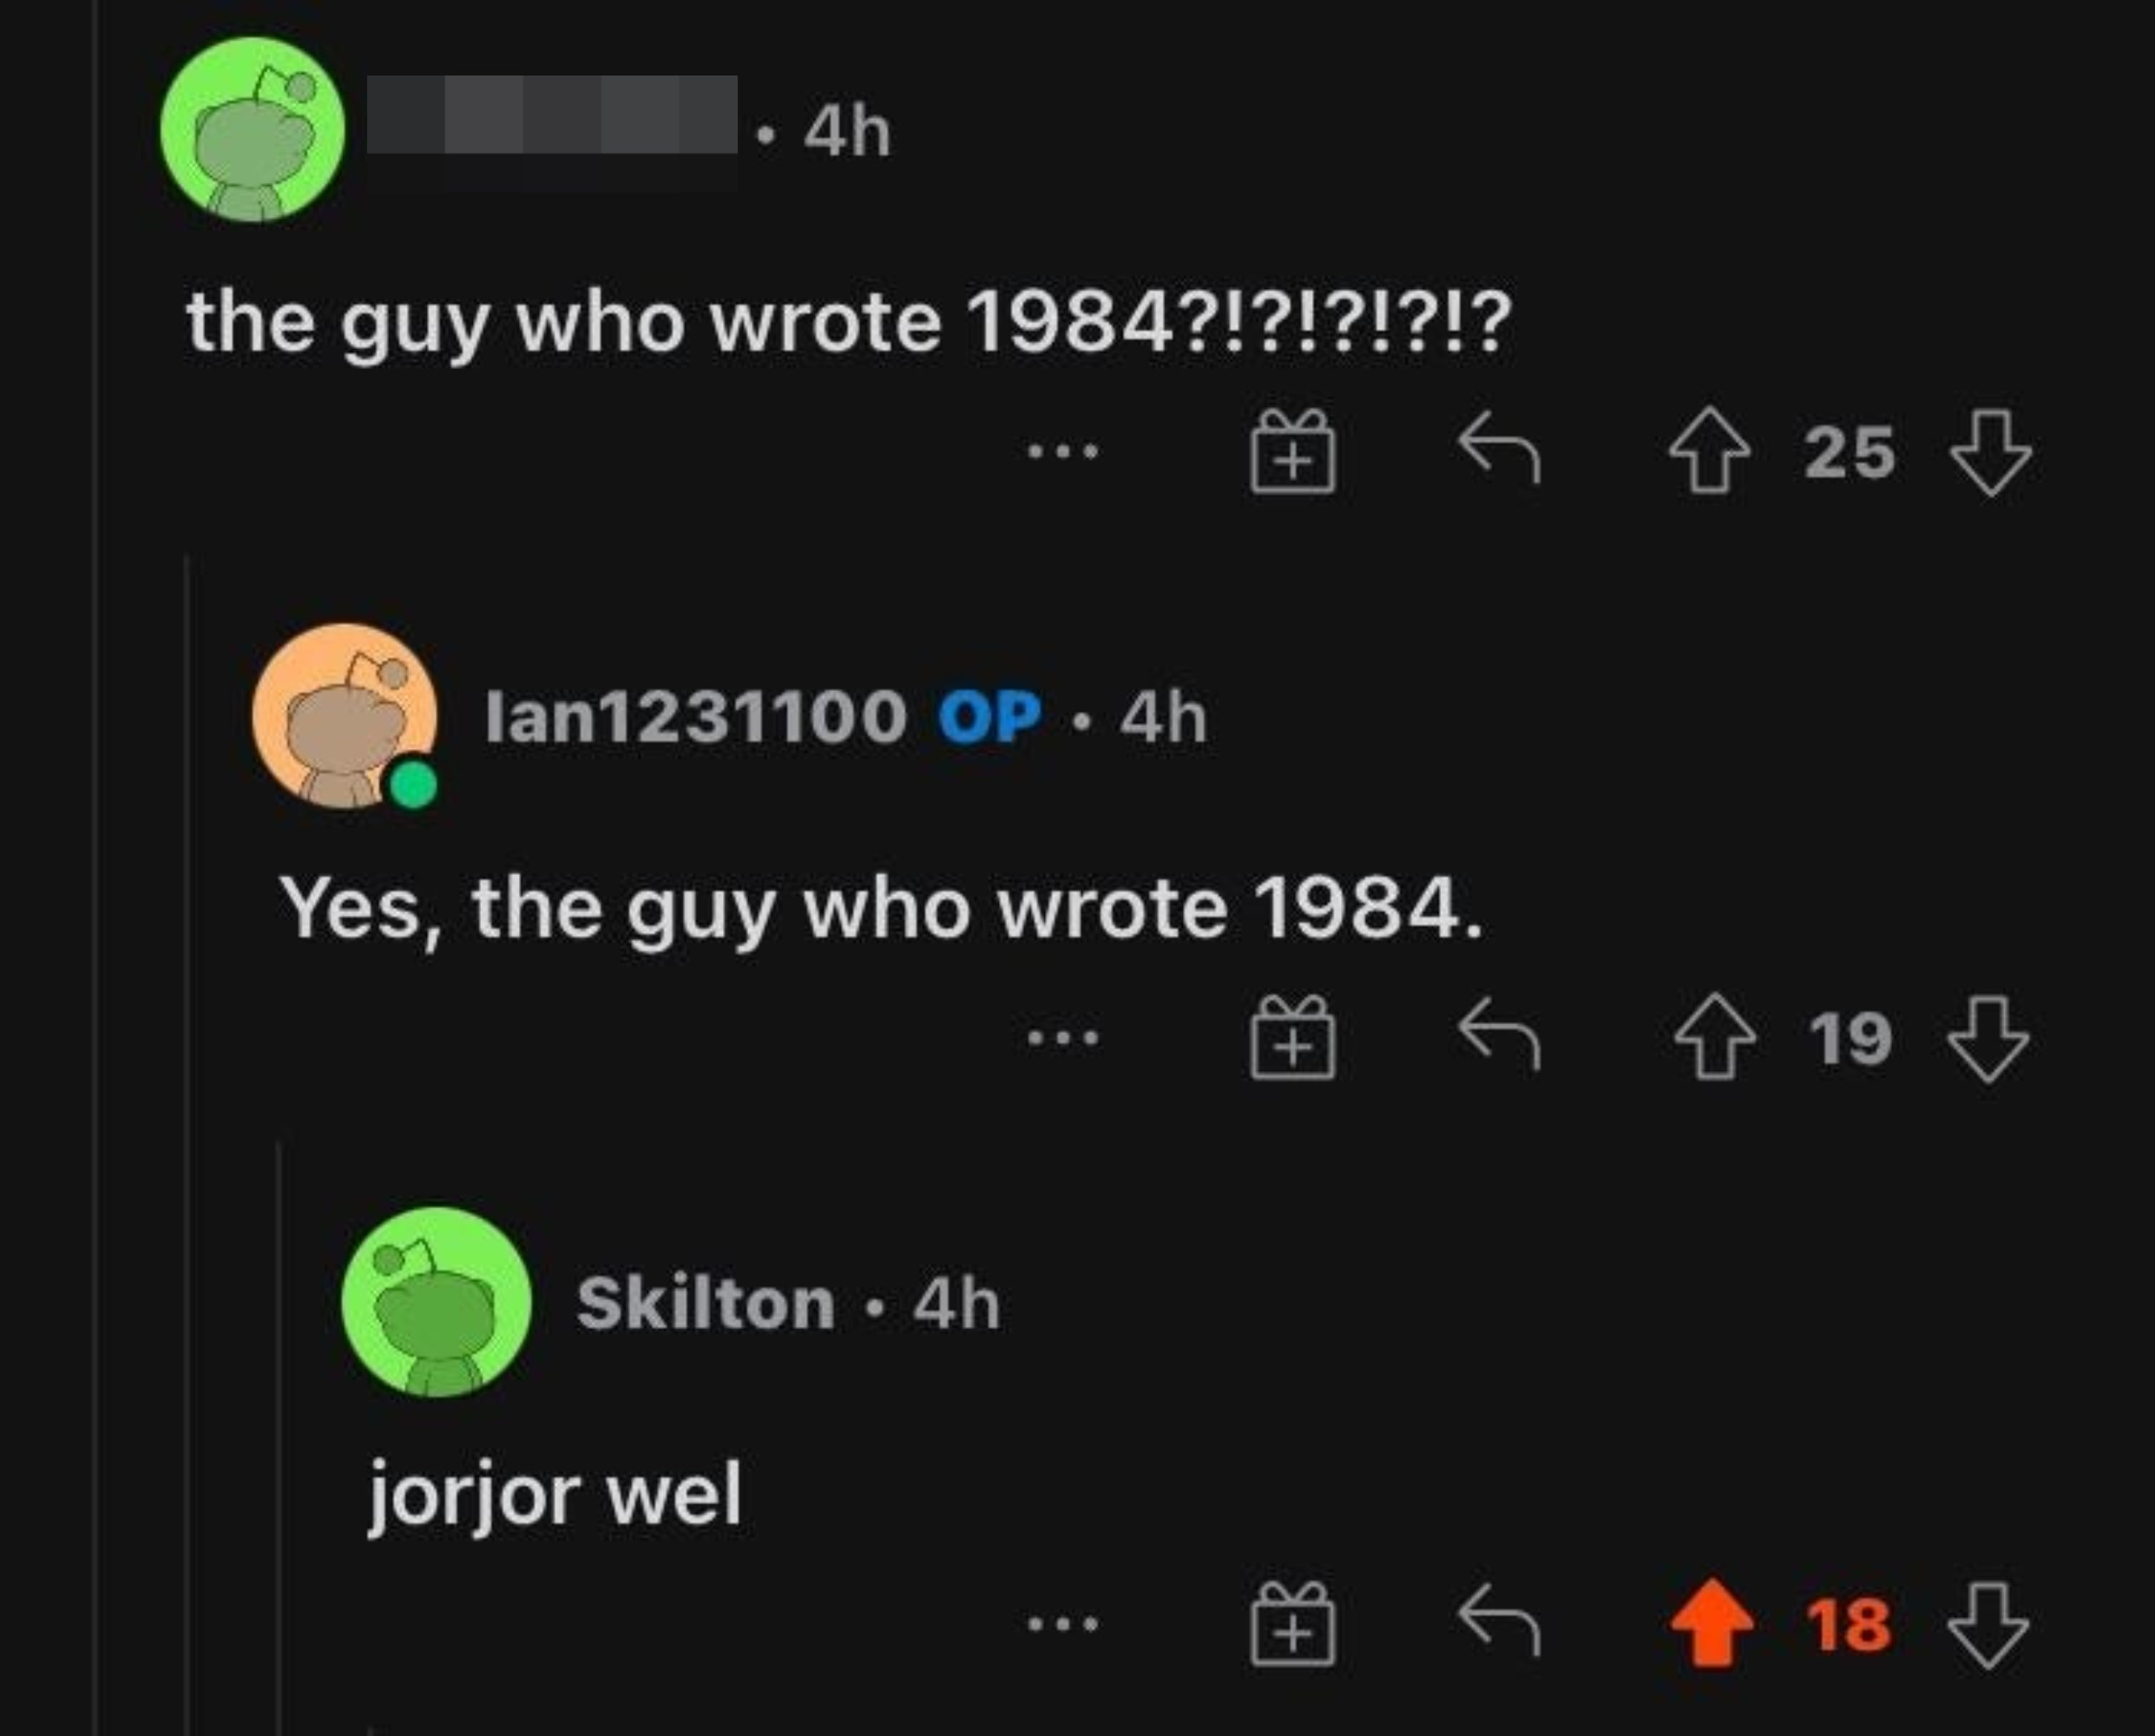 post where someone calls george orwell jorjor wel